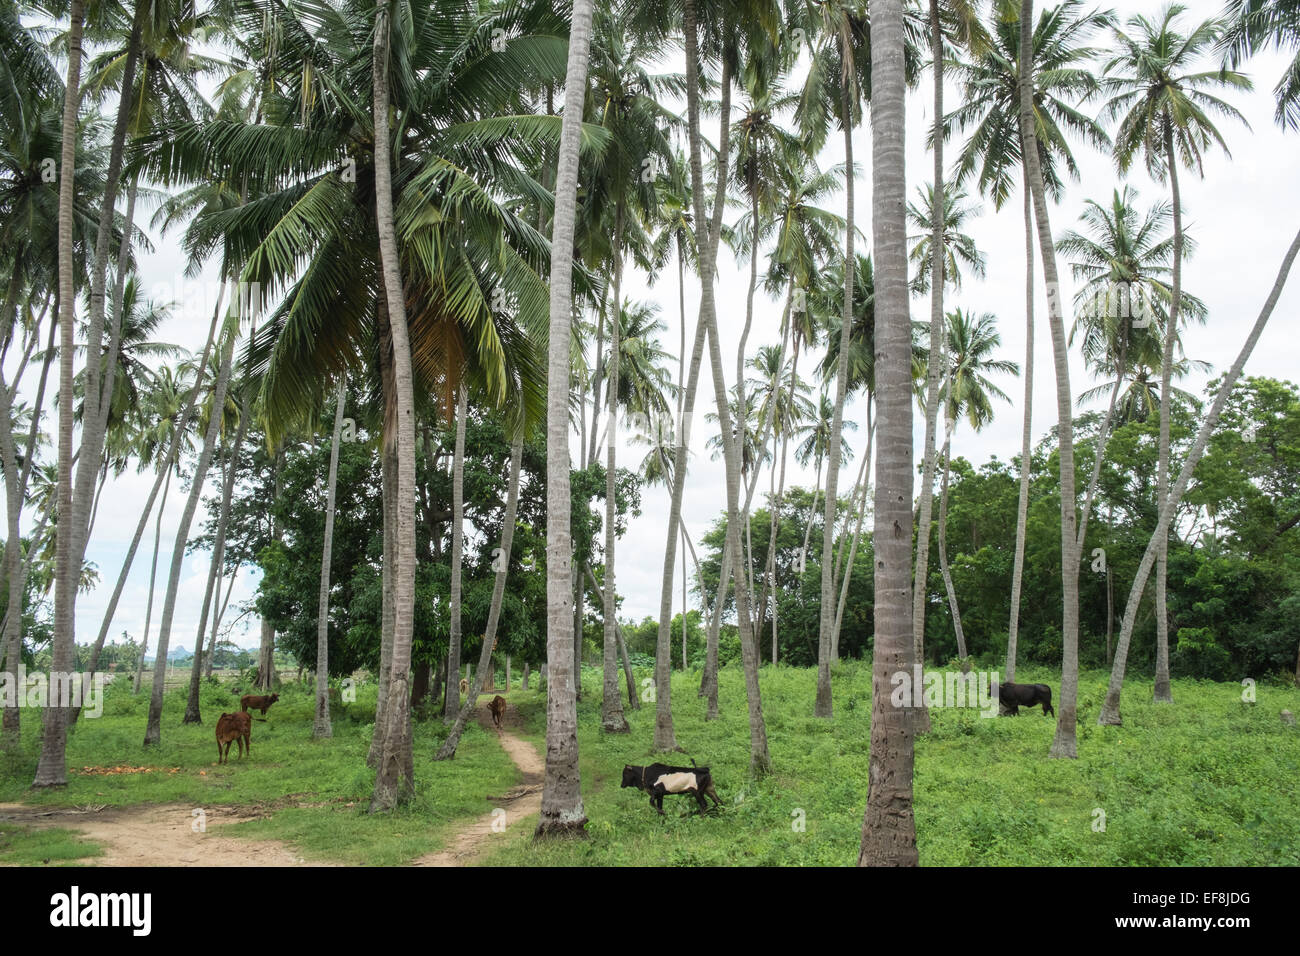 Palm trees and calfs,cows,animals in rural countryside near Tissa, Tissamaharama Sri Lanka. Stock Photo